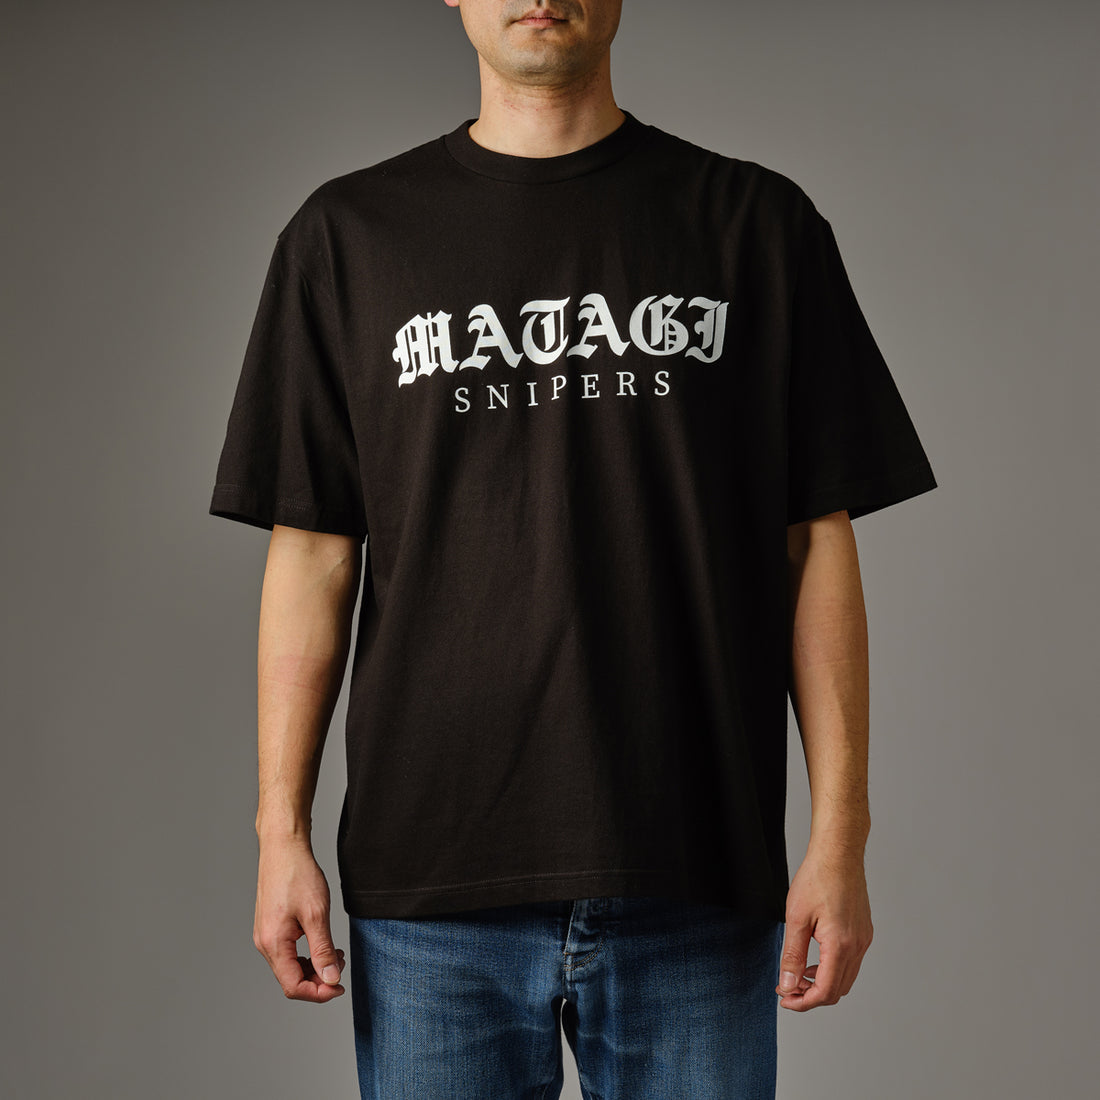 "MATAGI" LOGO Replica T-Shirt